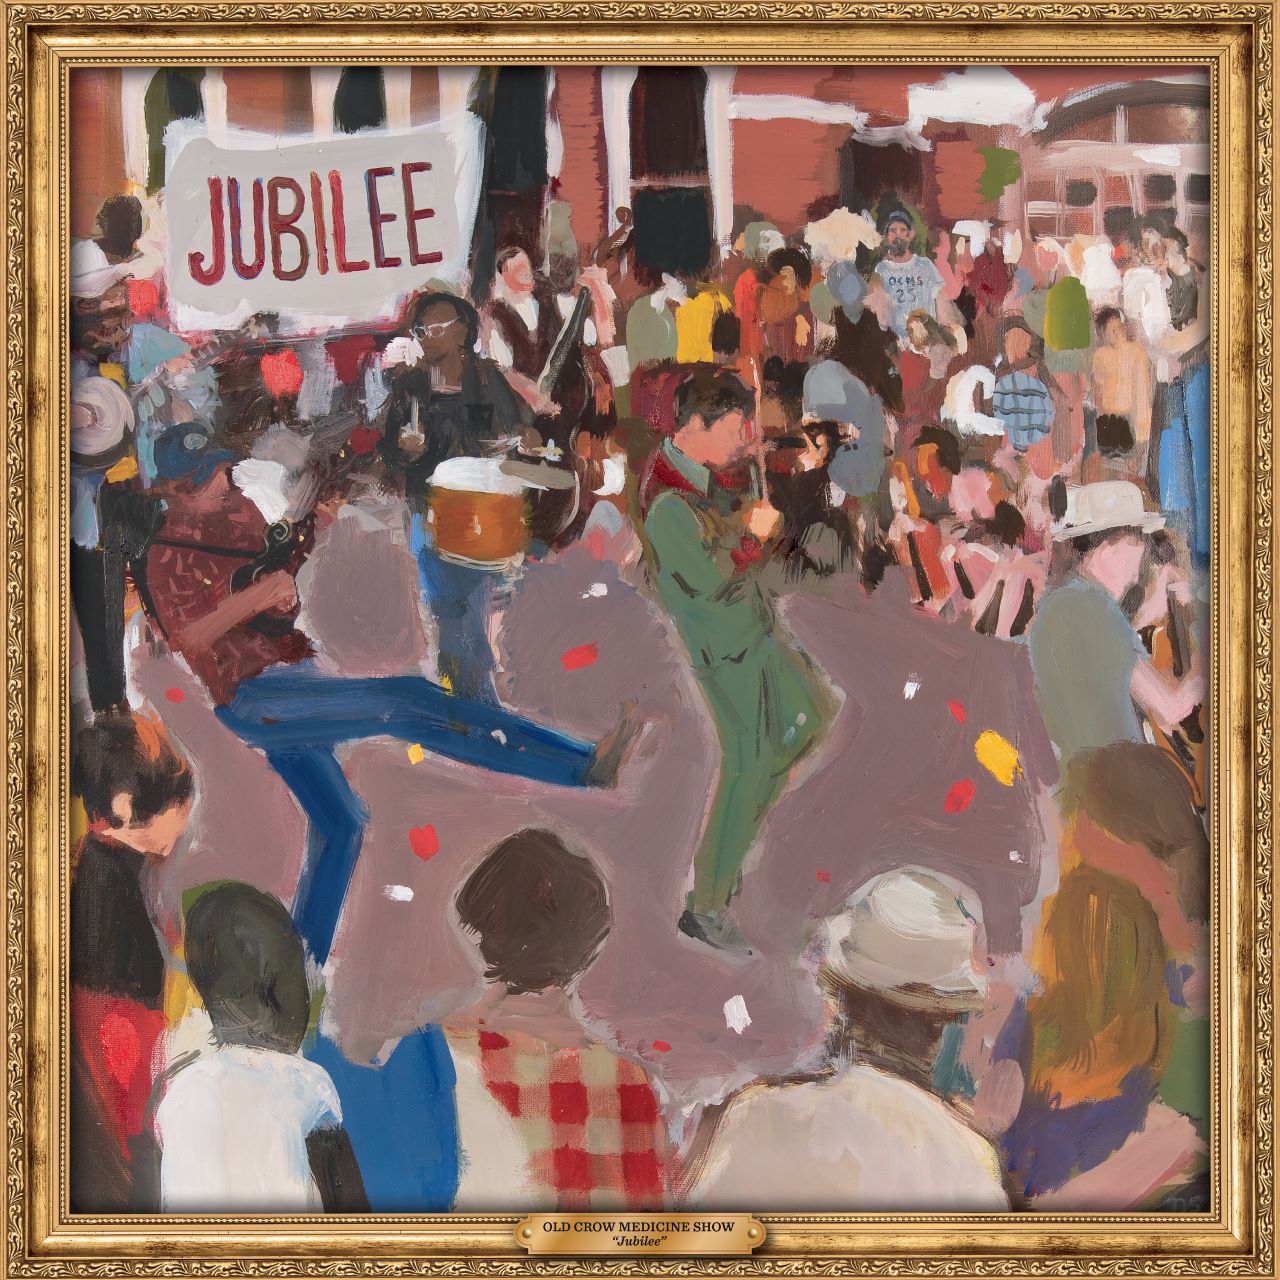 Old Crow Medicine Show - Jubilee cover album